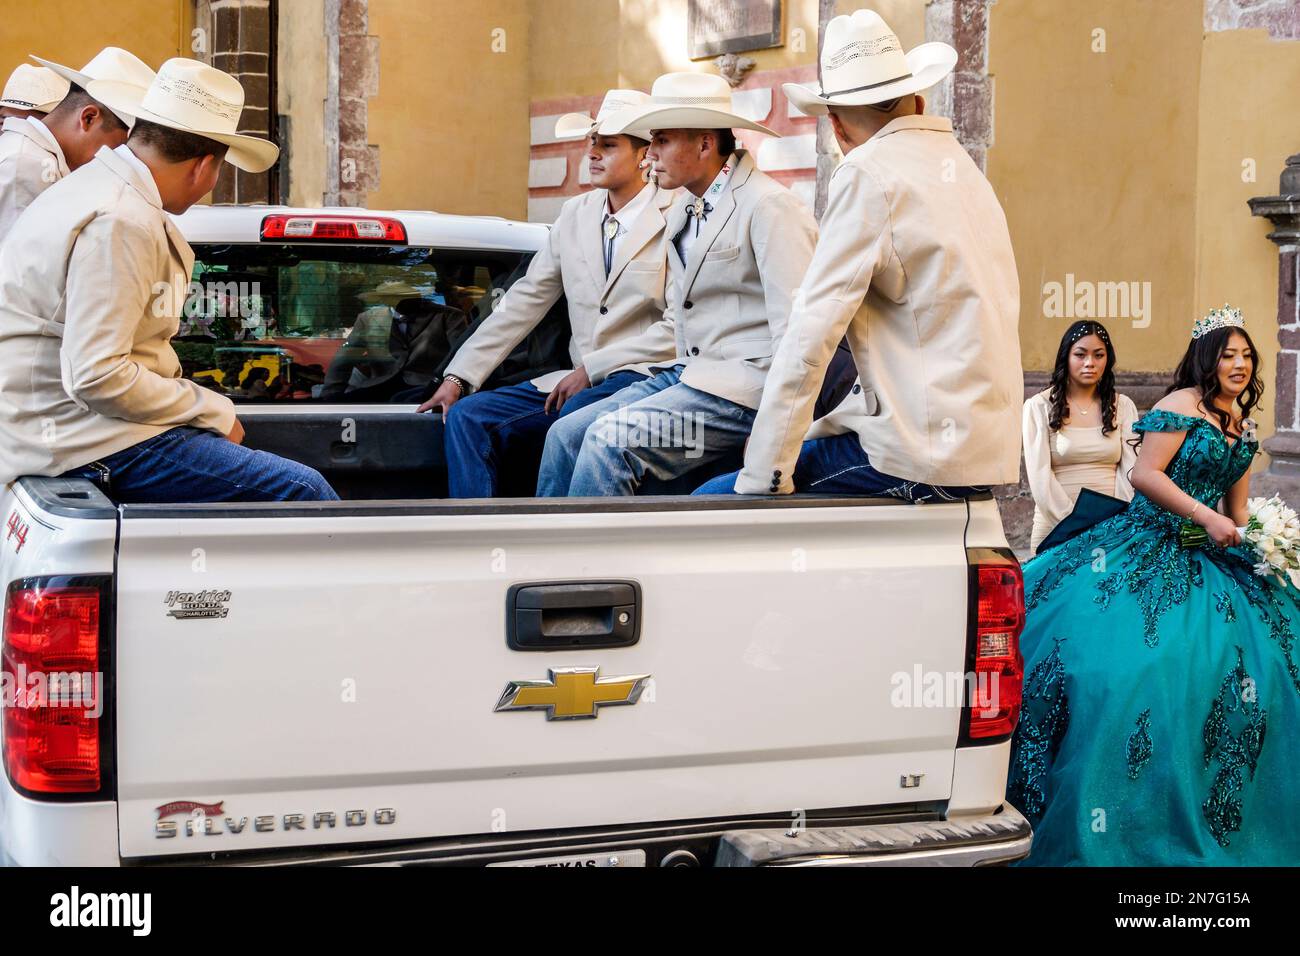 San Miguel de Allende Guanajuato Mexico, historisches Zentrum von Historico Central, Zona Centro, im Pickup-Truck, Themenparty Gäste mit Cowboyhut ha Stockfoto